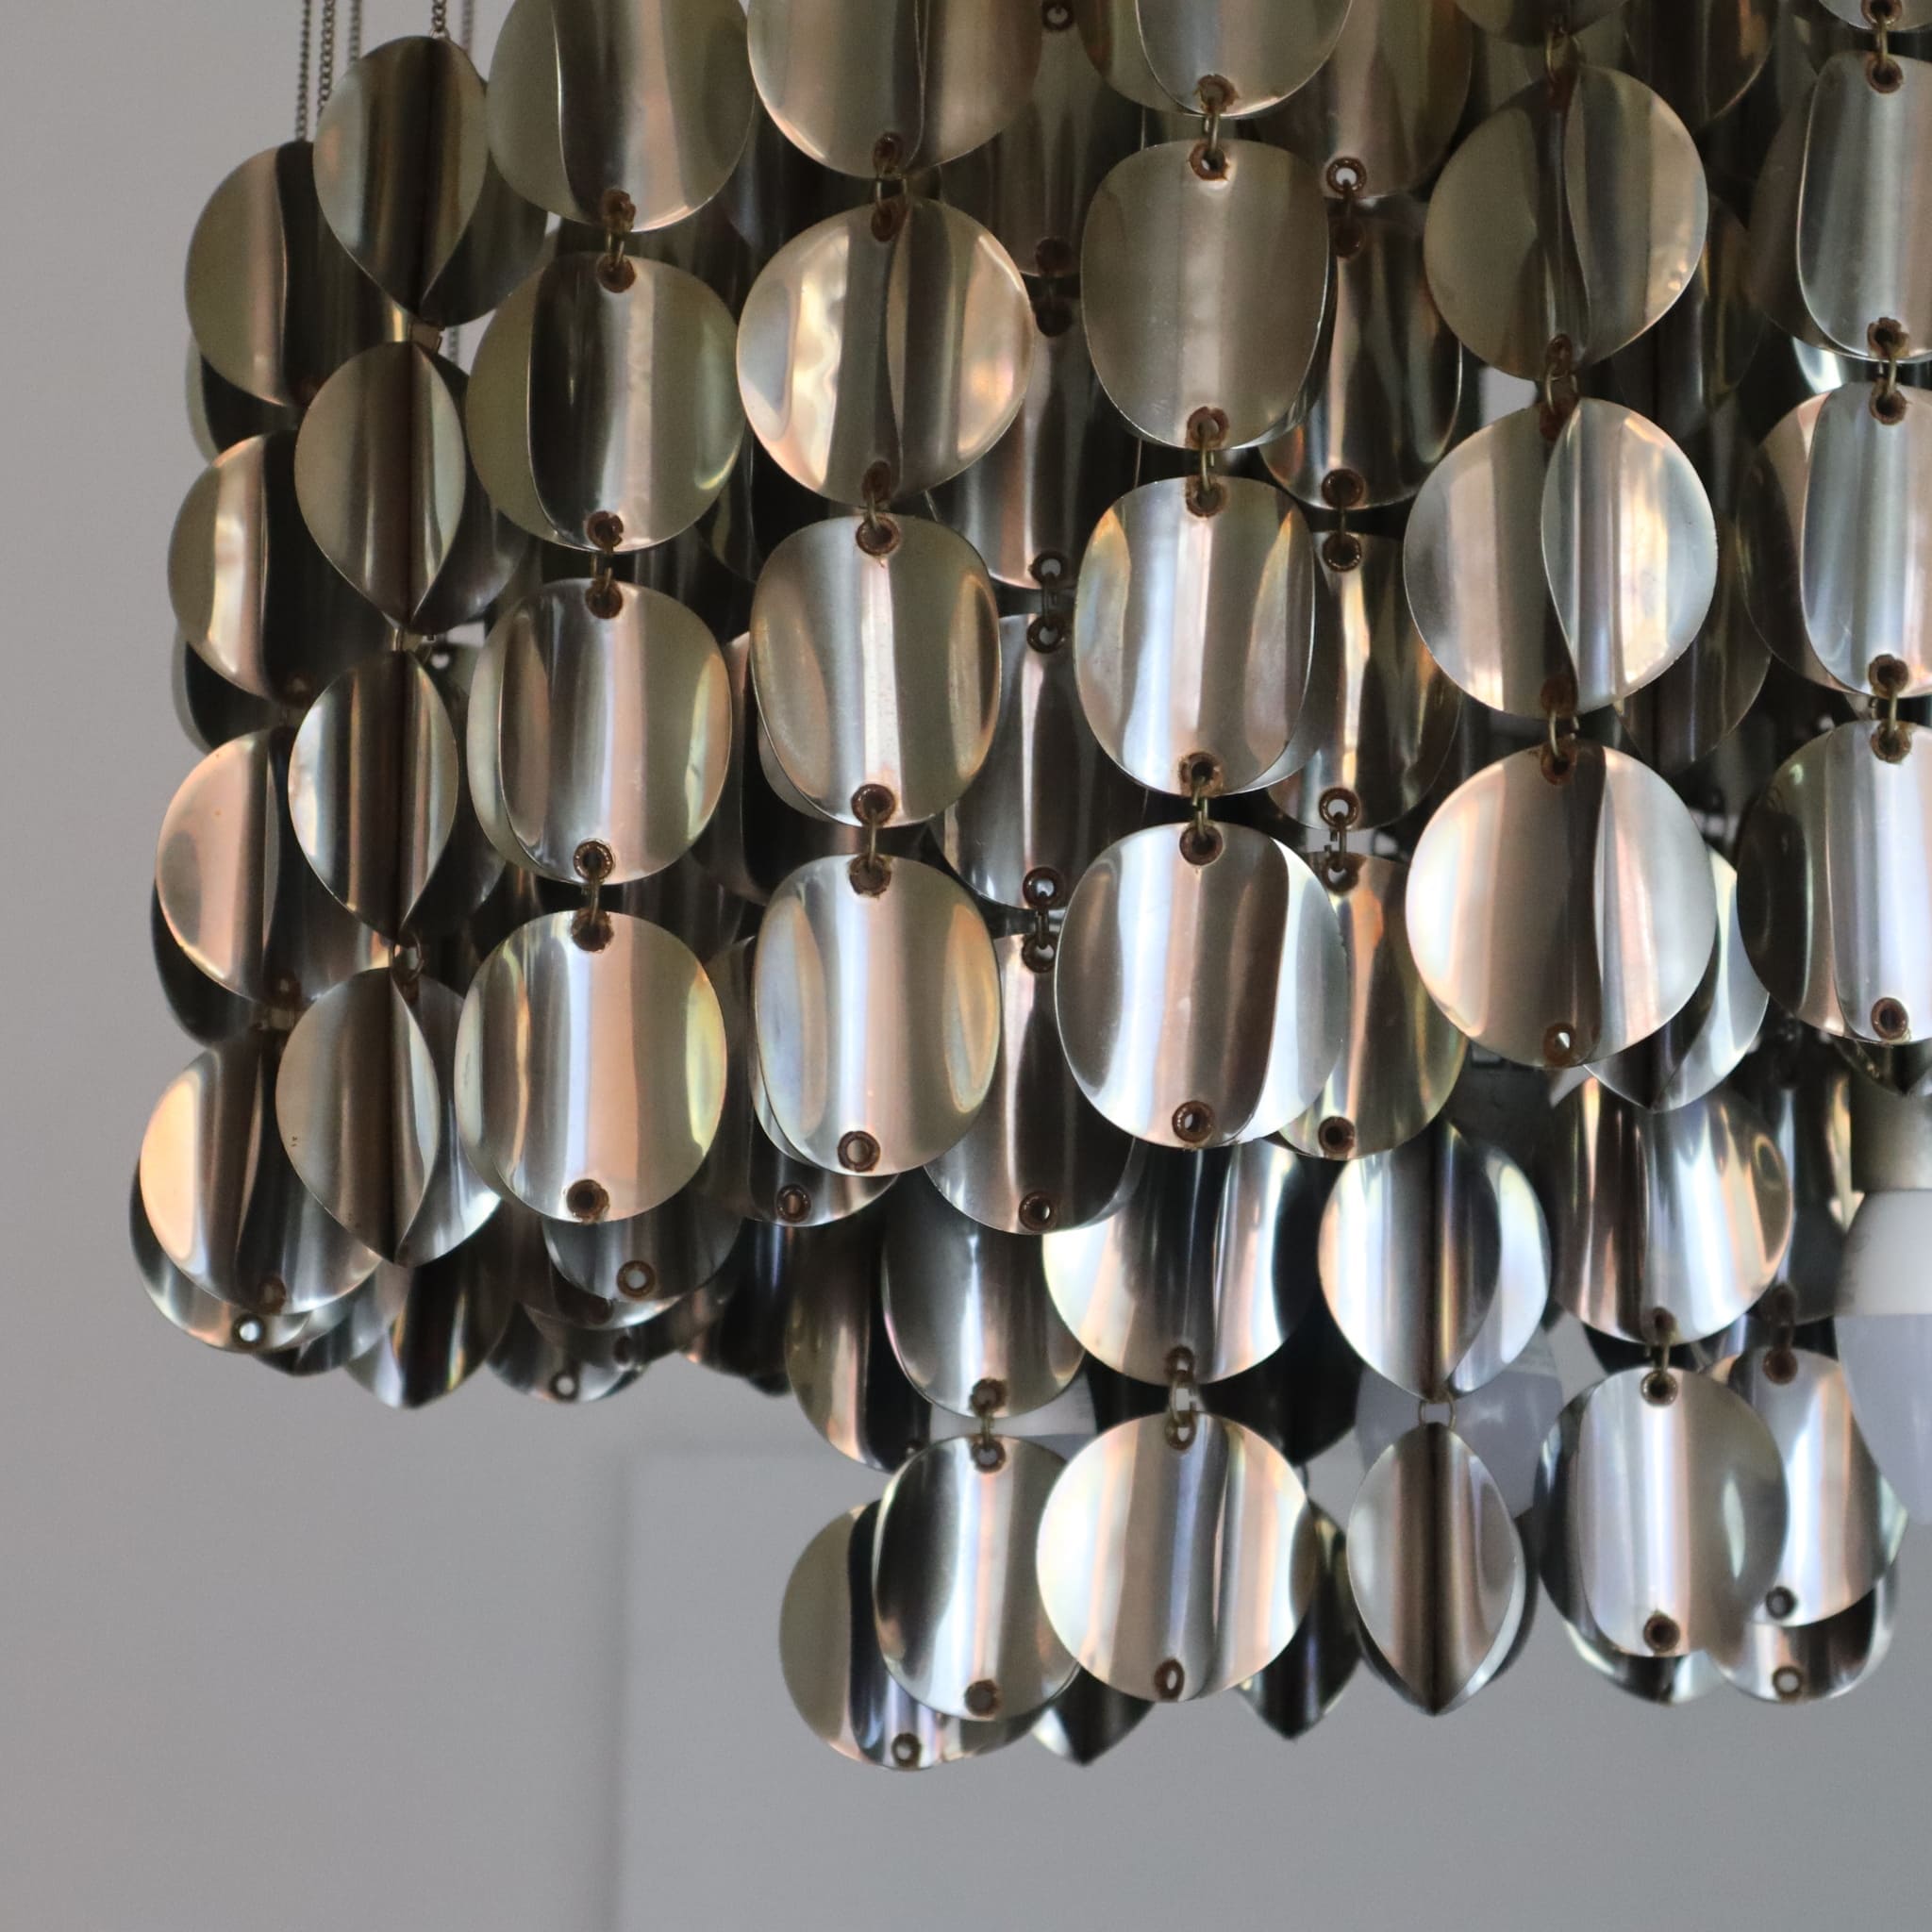 visionidepoca-modern-art-chandelier-with-steel-pendants-70s-front-view-detail-pendants